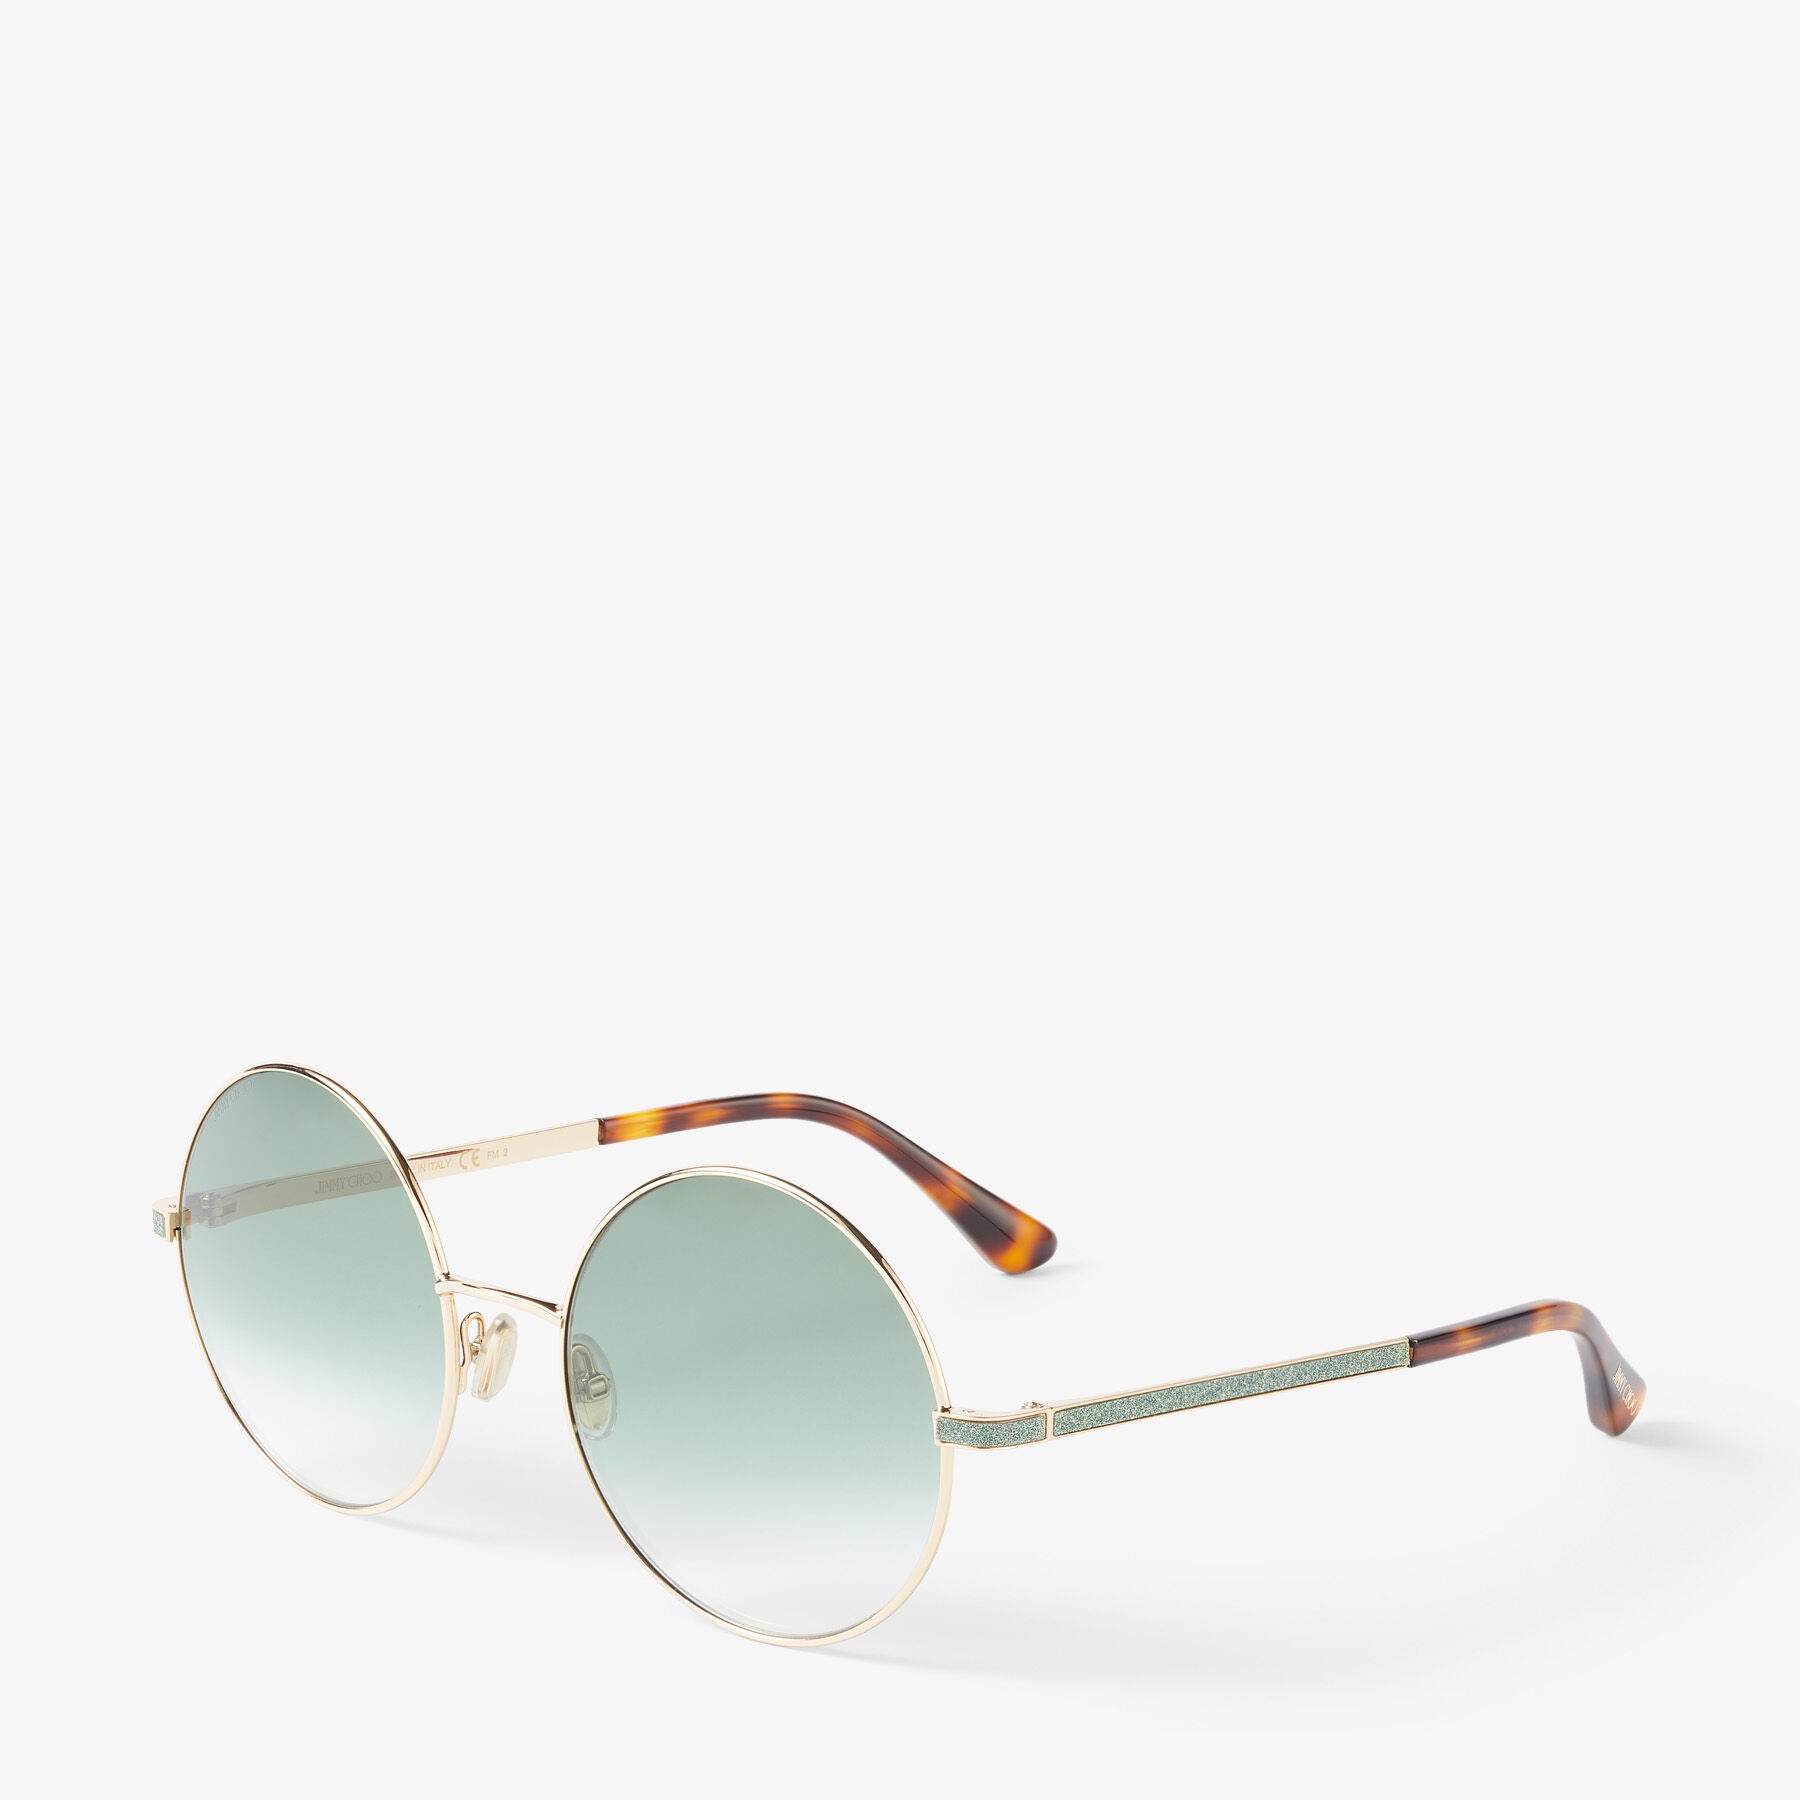 Oriane/s 57
Green and Gold Havana Round-Frame Sunglasses - 3